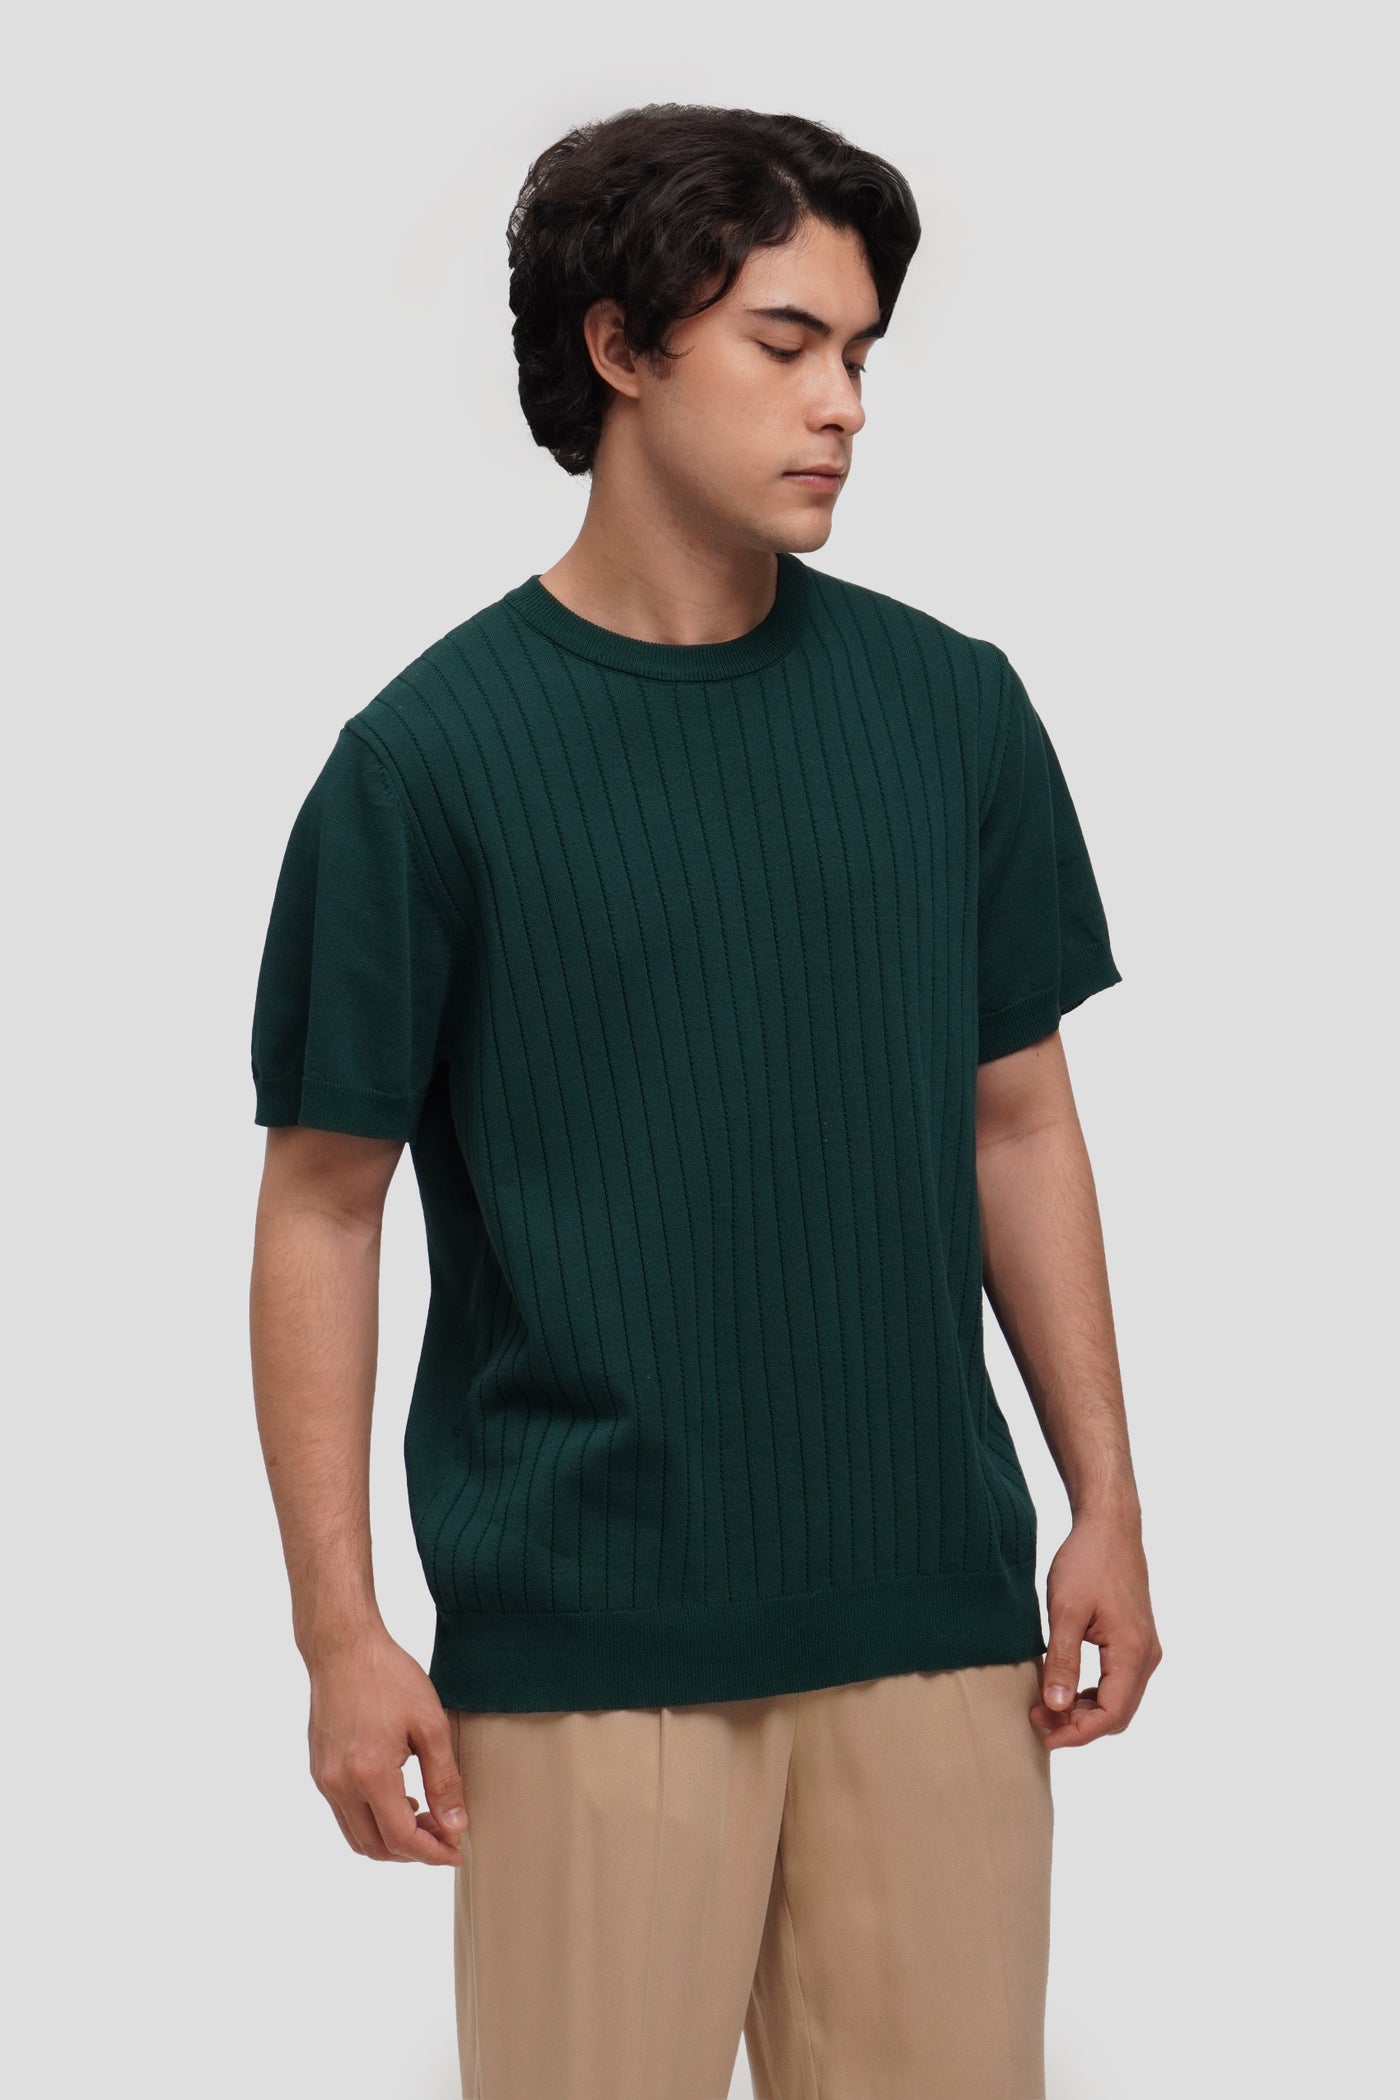 Textured Flat Knit T-Shirt With Hemband